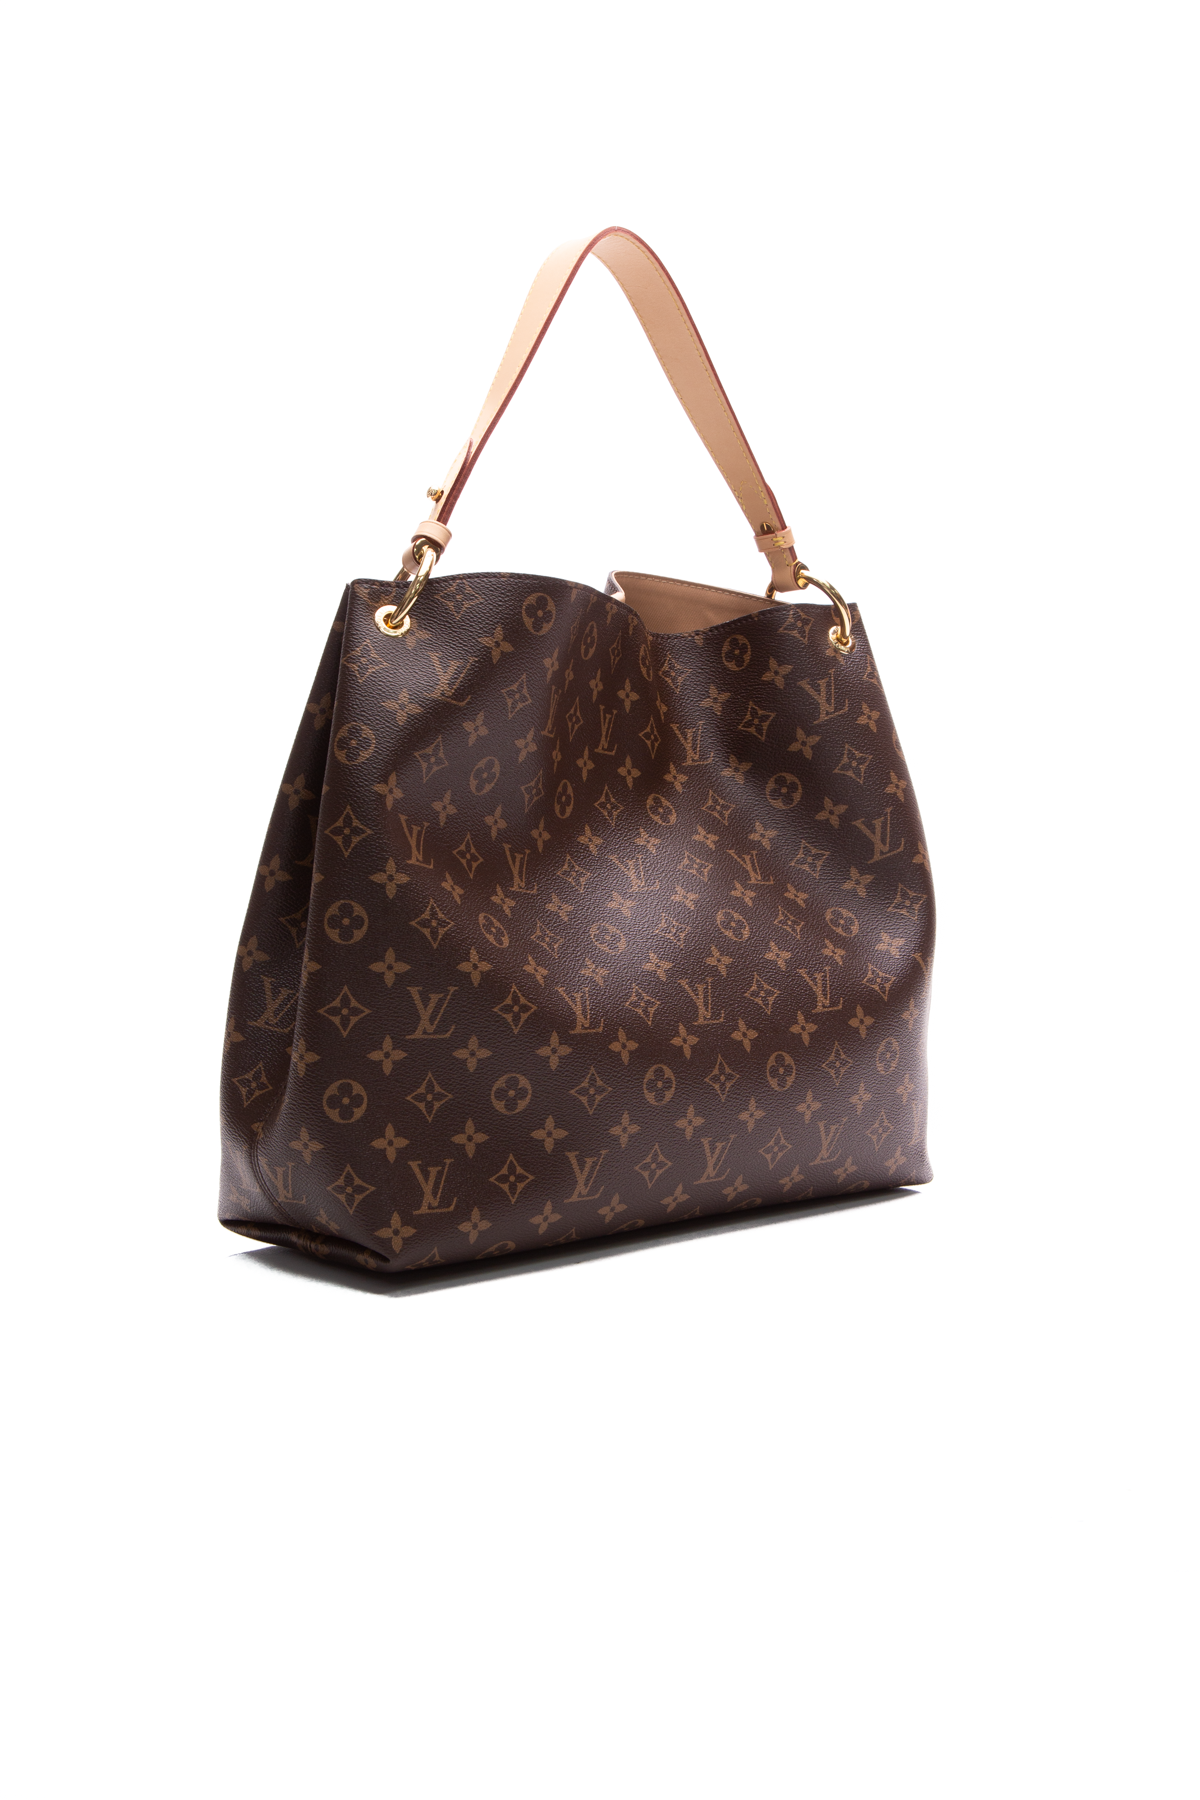 Louis Vuitton Graceful Handbag